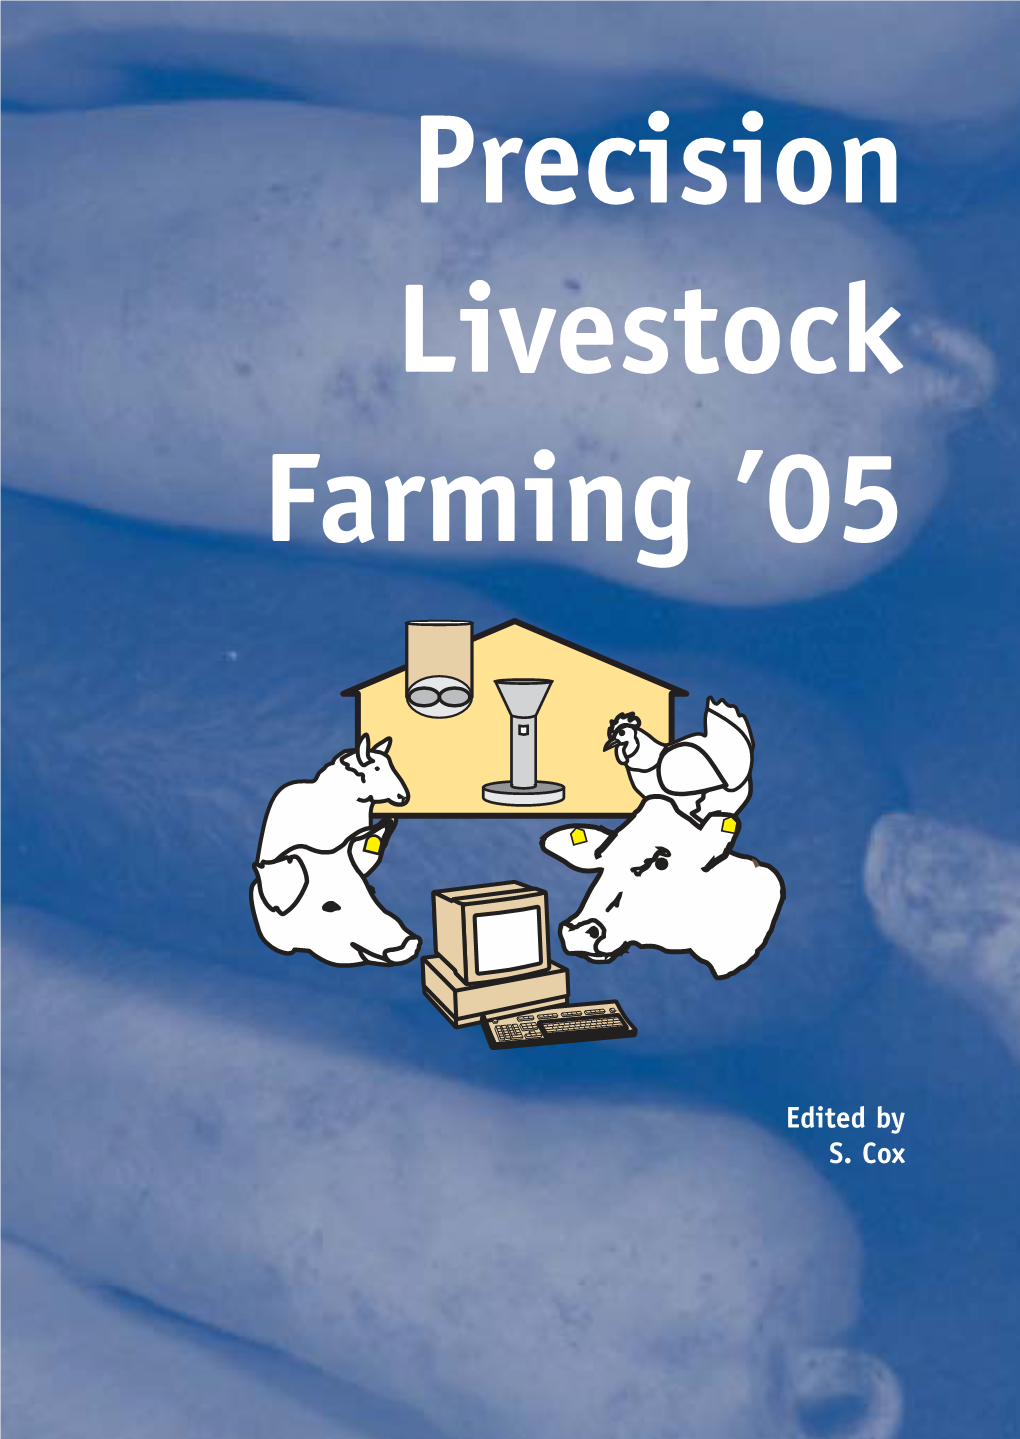 Precision Livestock Farming ’05